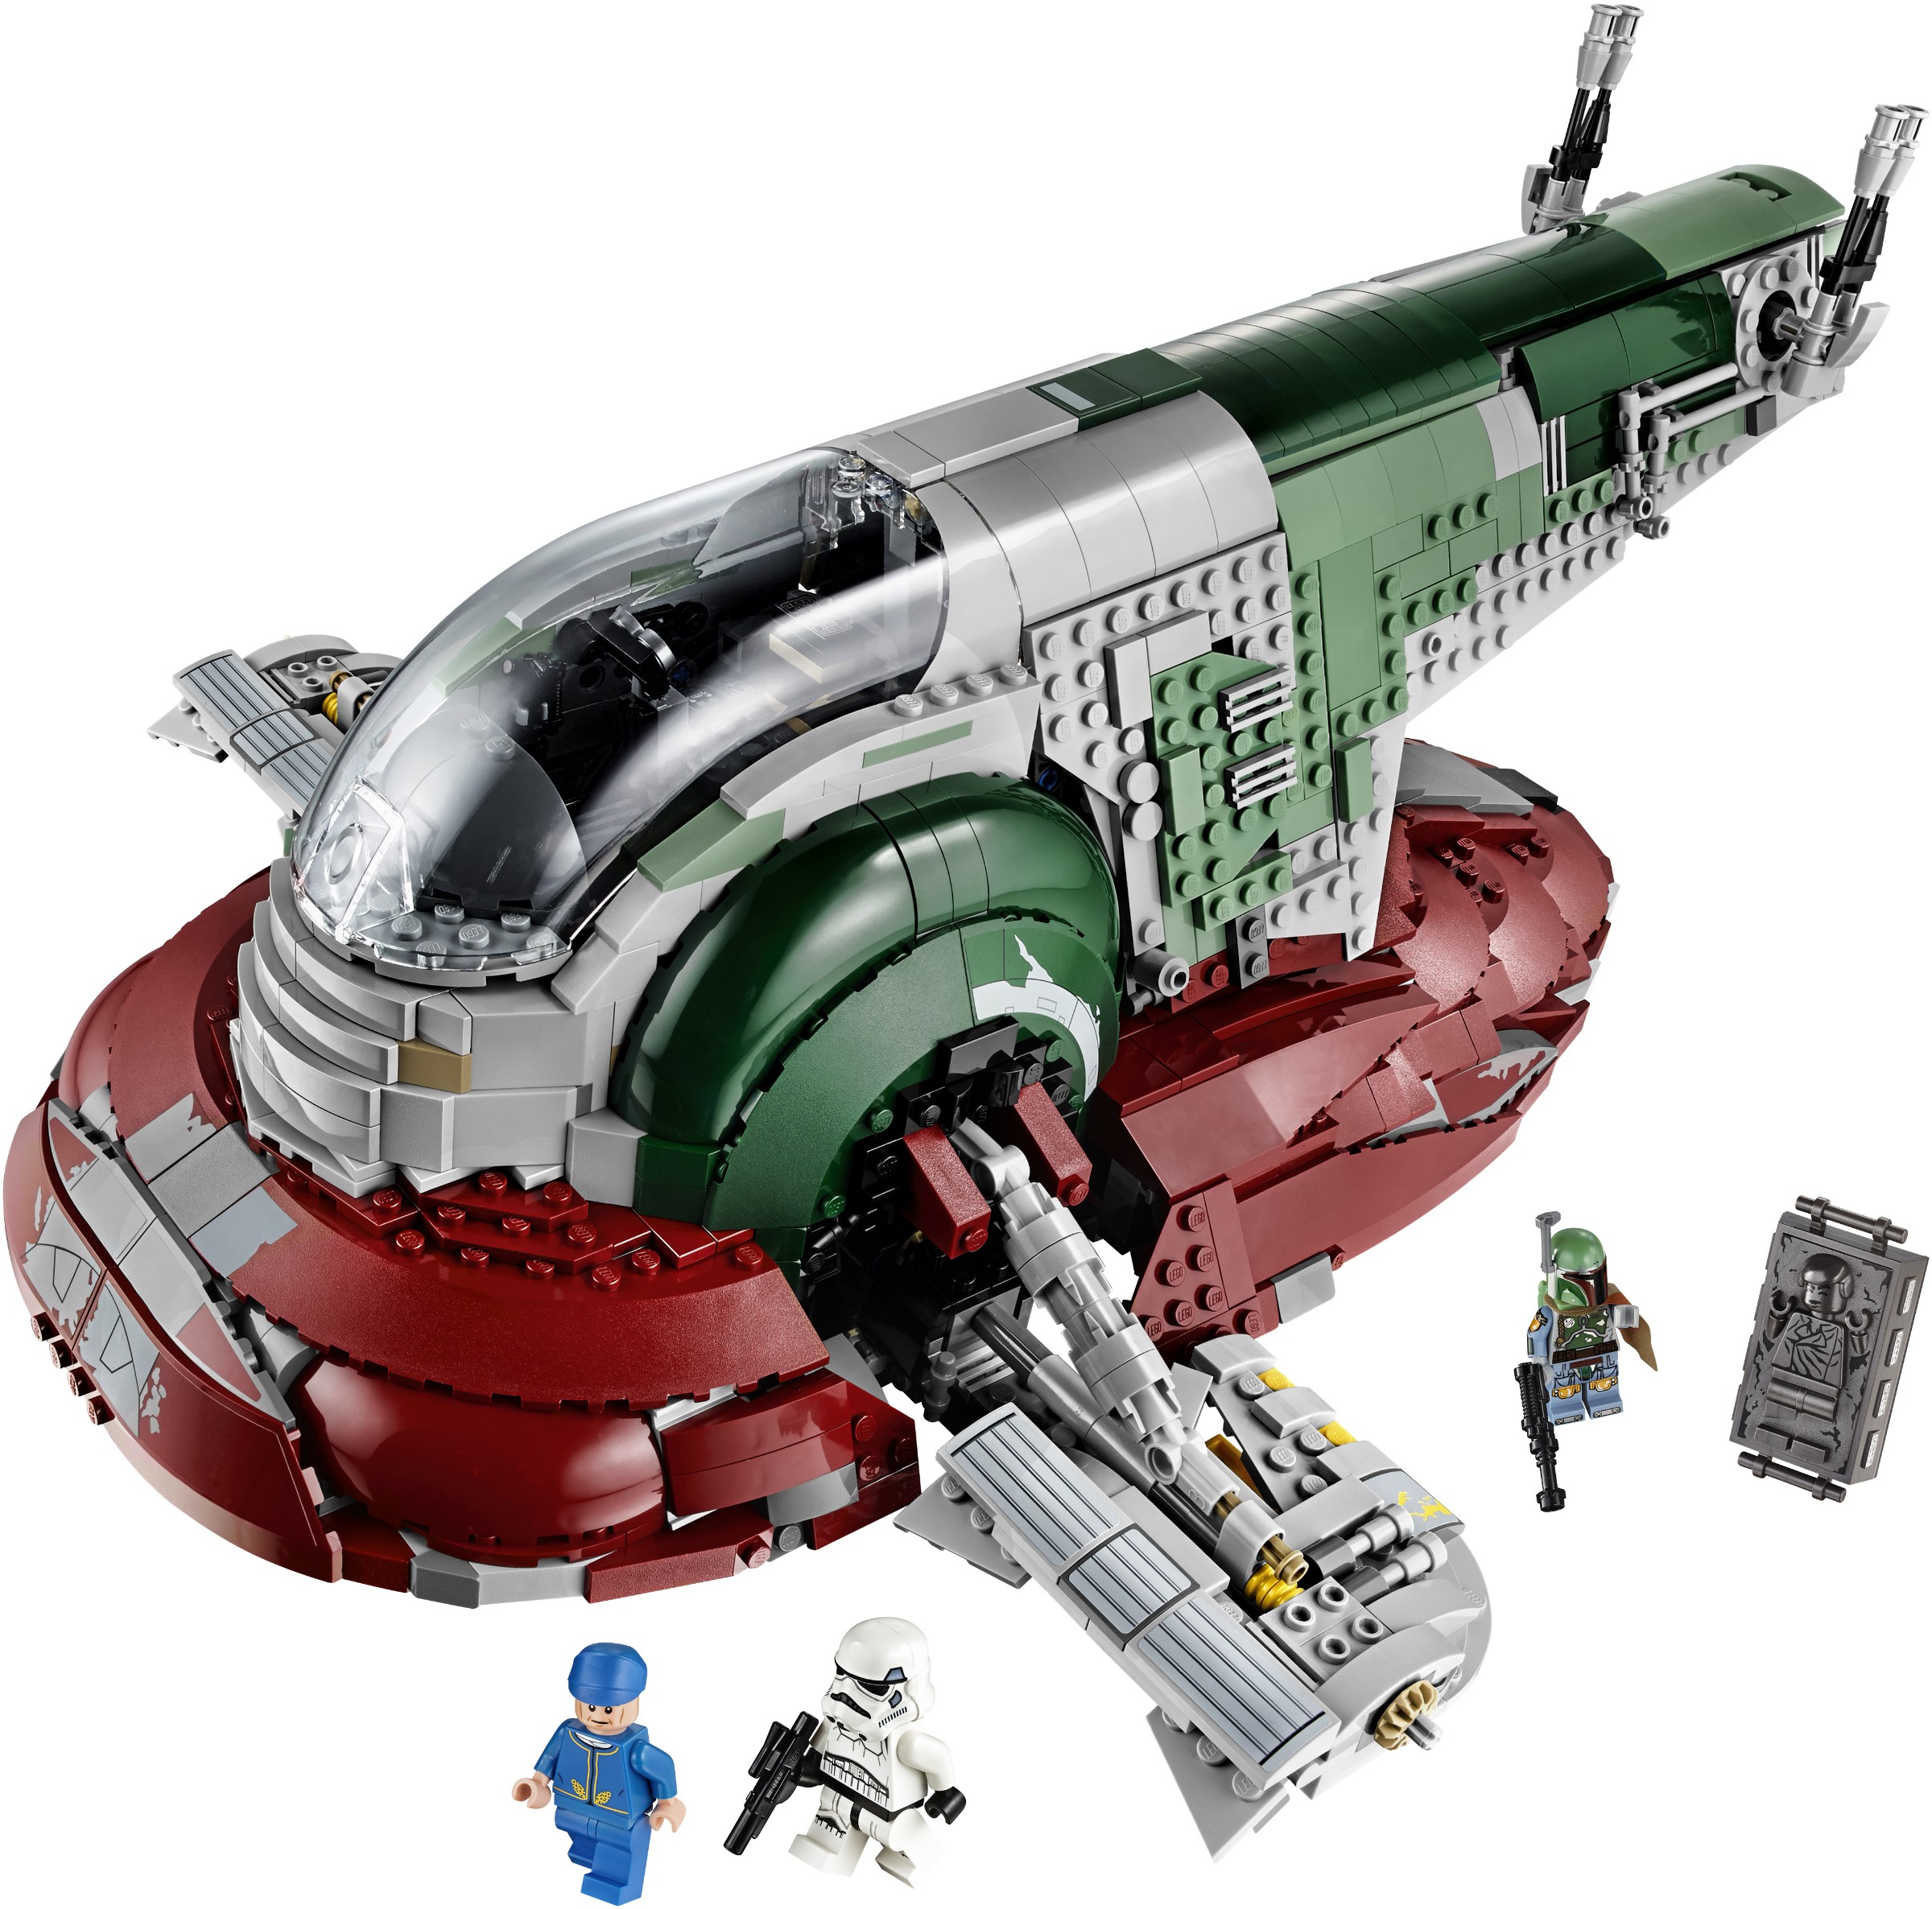 LEGO Star Wars UCS Slave I (75060) - $199